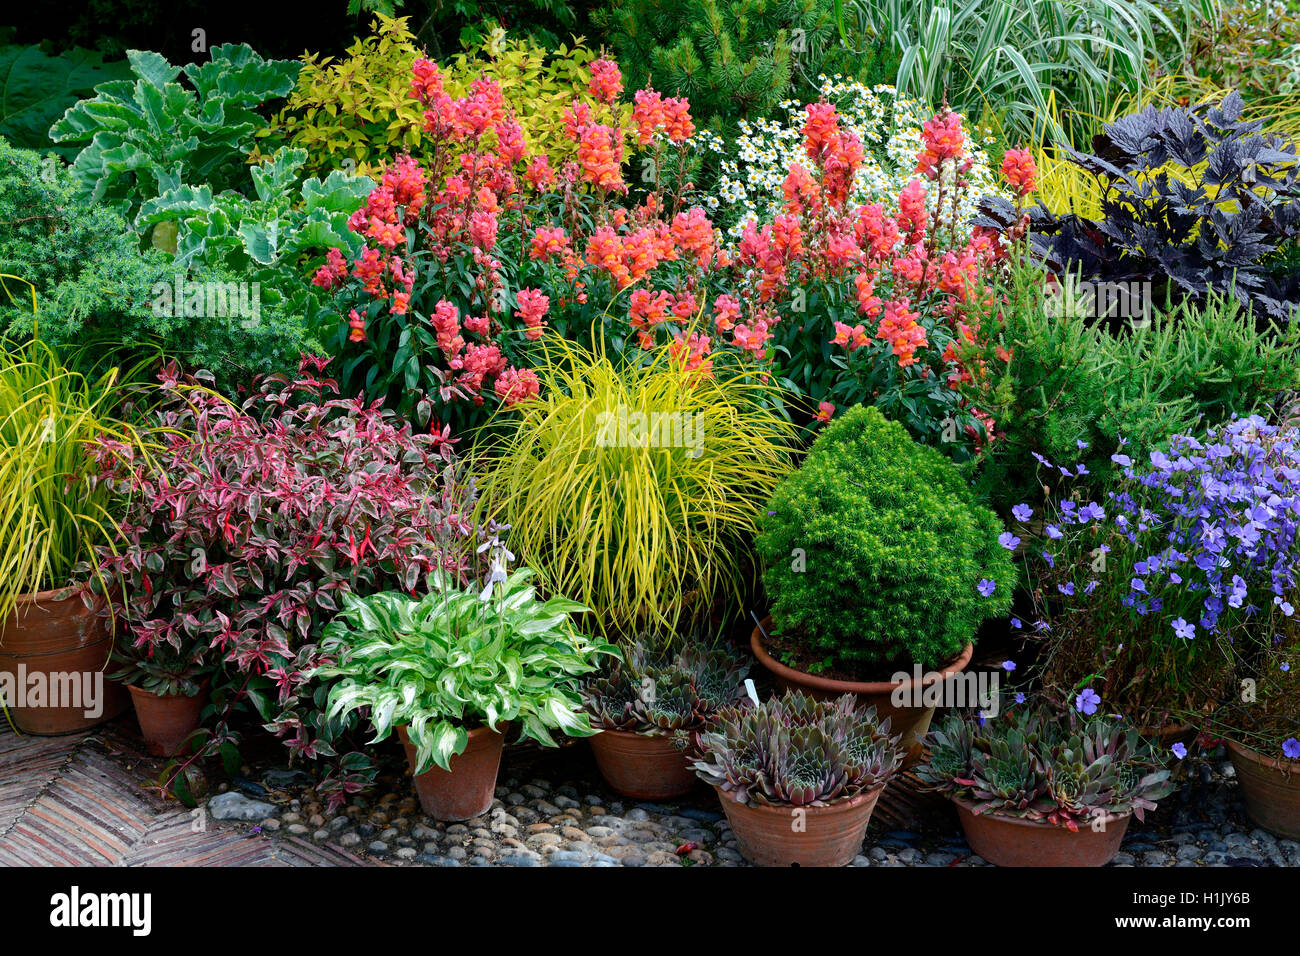 Bepflanzte Blumentoepfe mit Loewenmaul, Hosta, Hauswurz Stock Photo